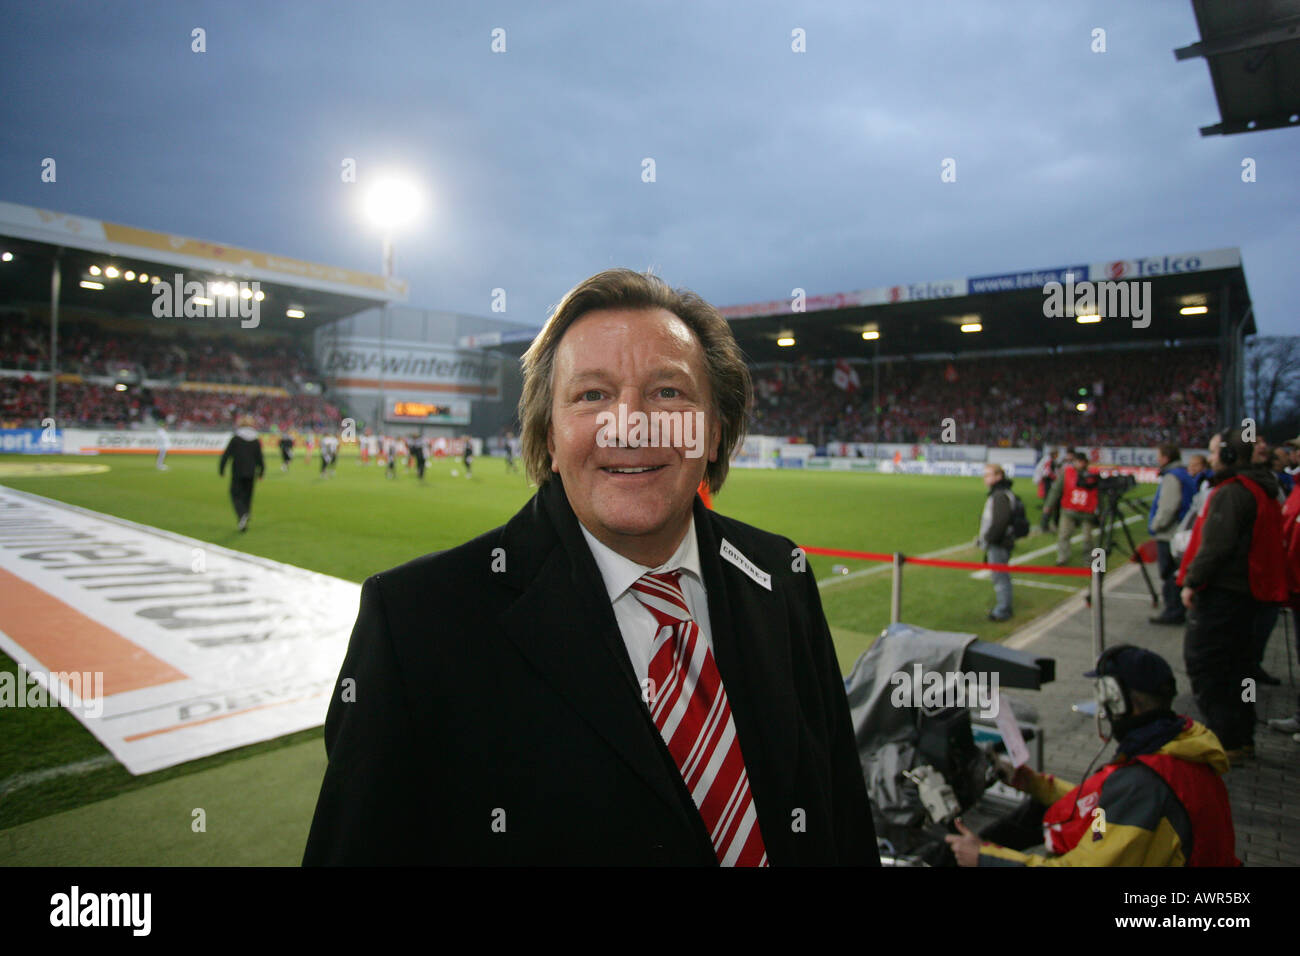 President of the german soccer club FSV Mainz 05, Harald Strutz Stock Photo